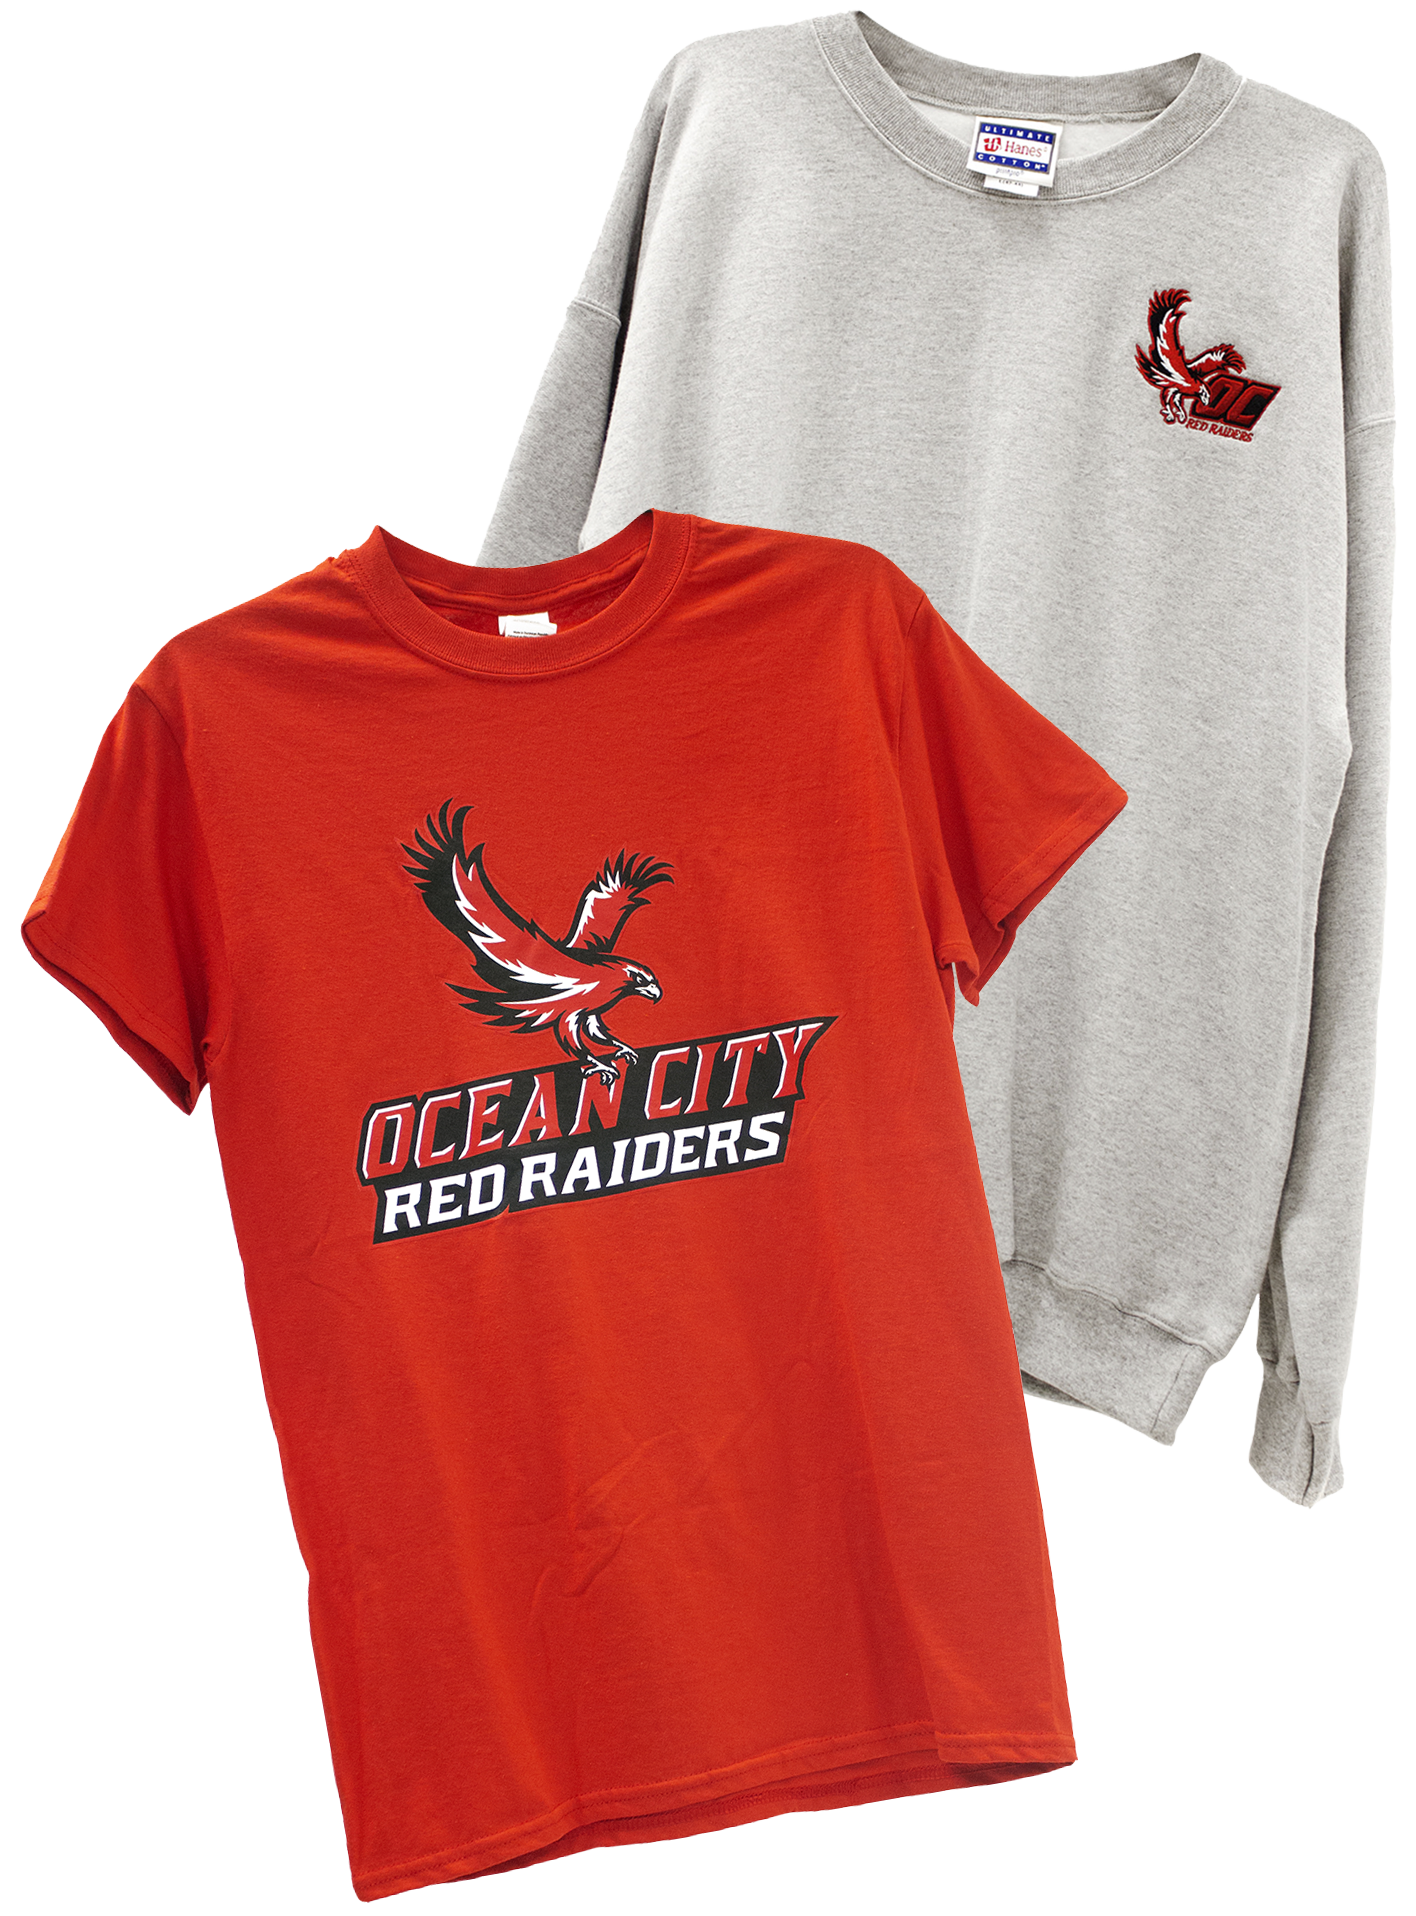 Red Raiders Clothing Catalog 